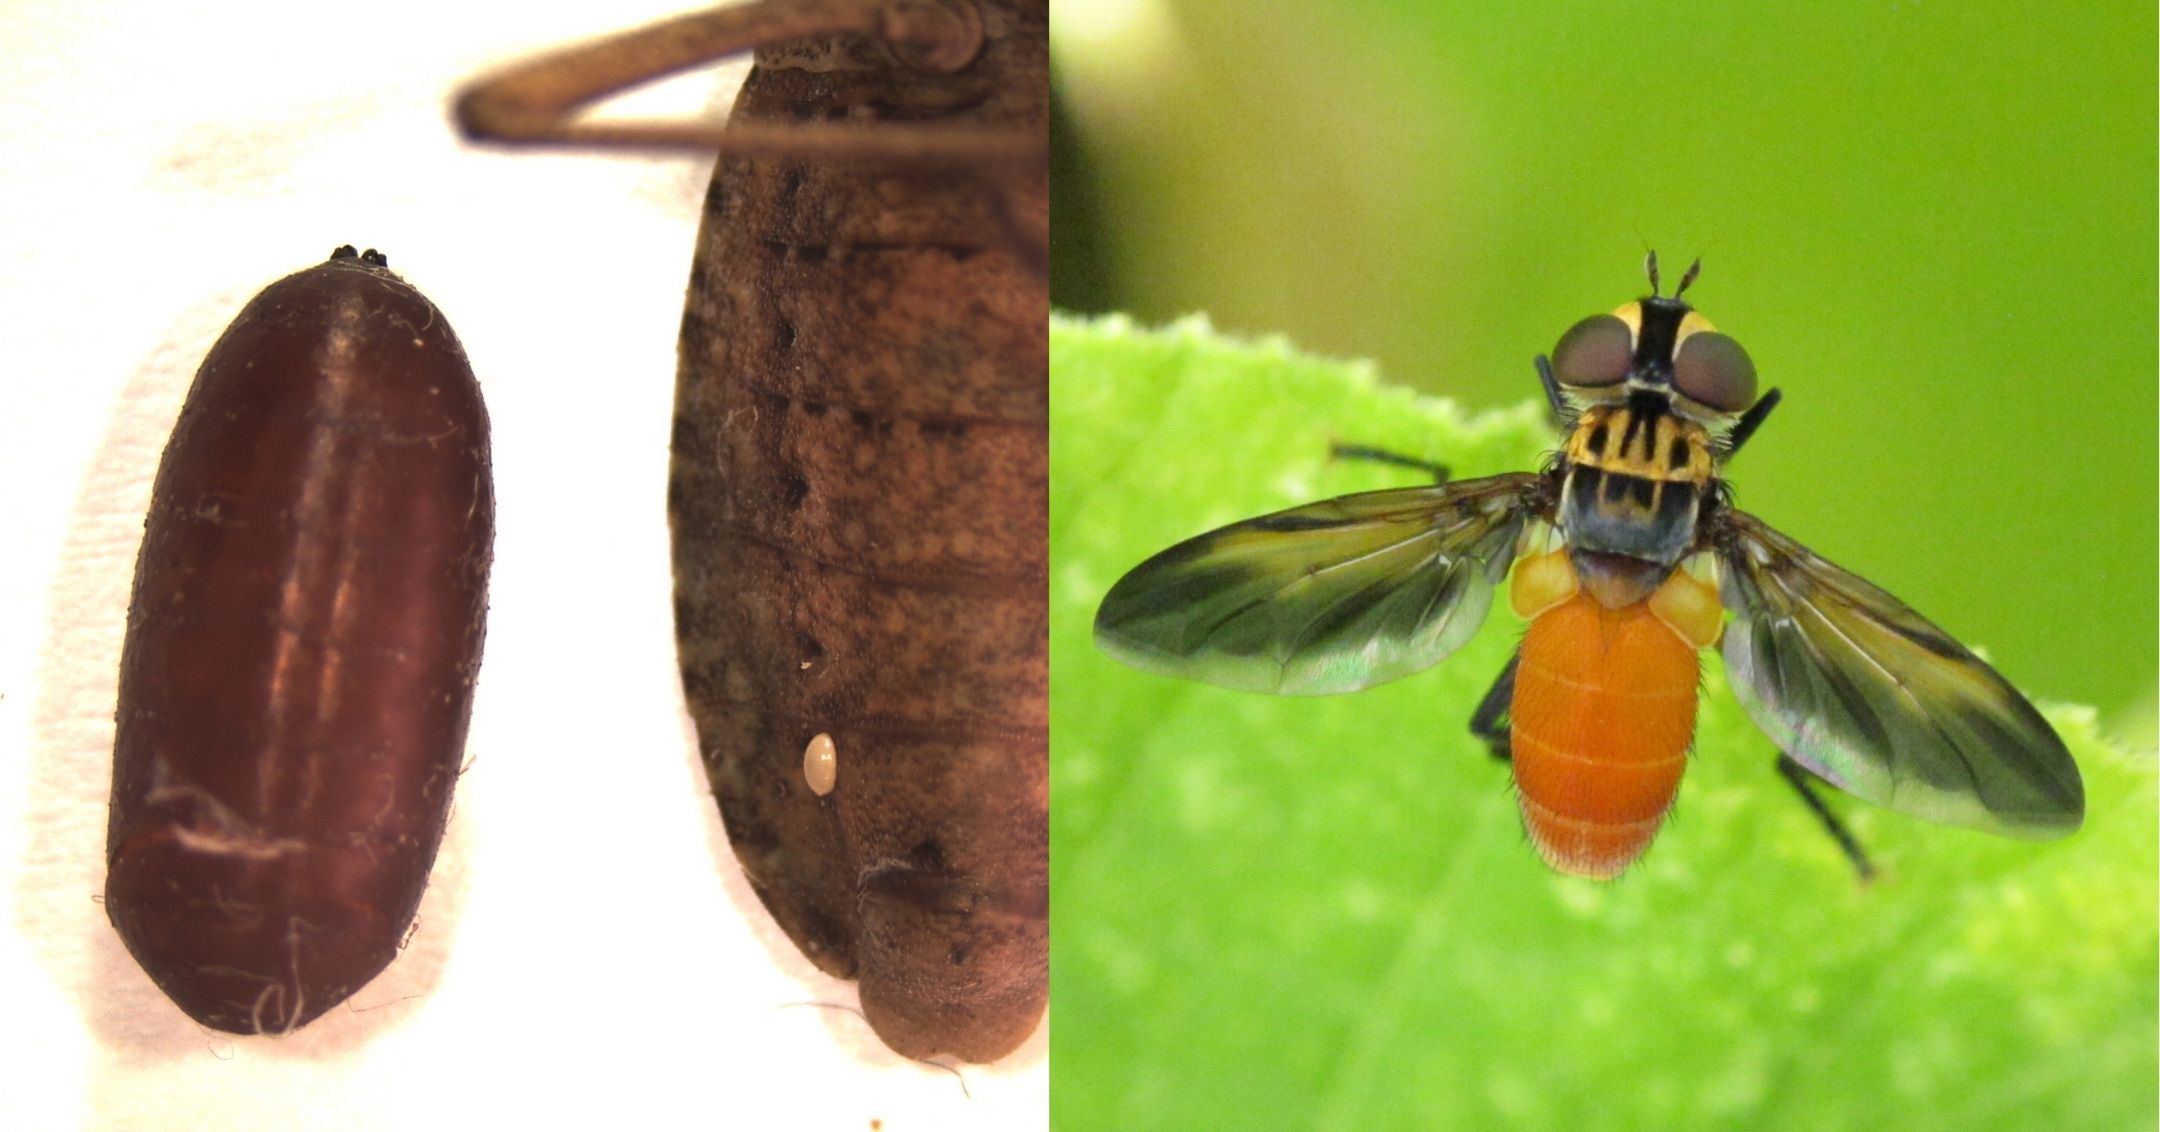 Parasitized Squash Bug and Tachinid Fly